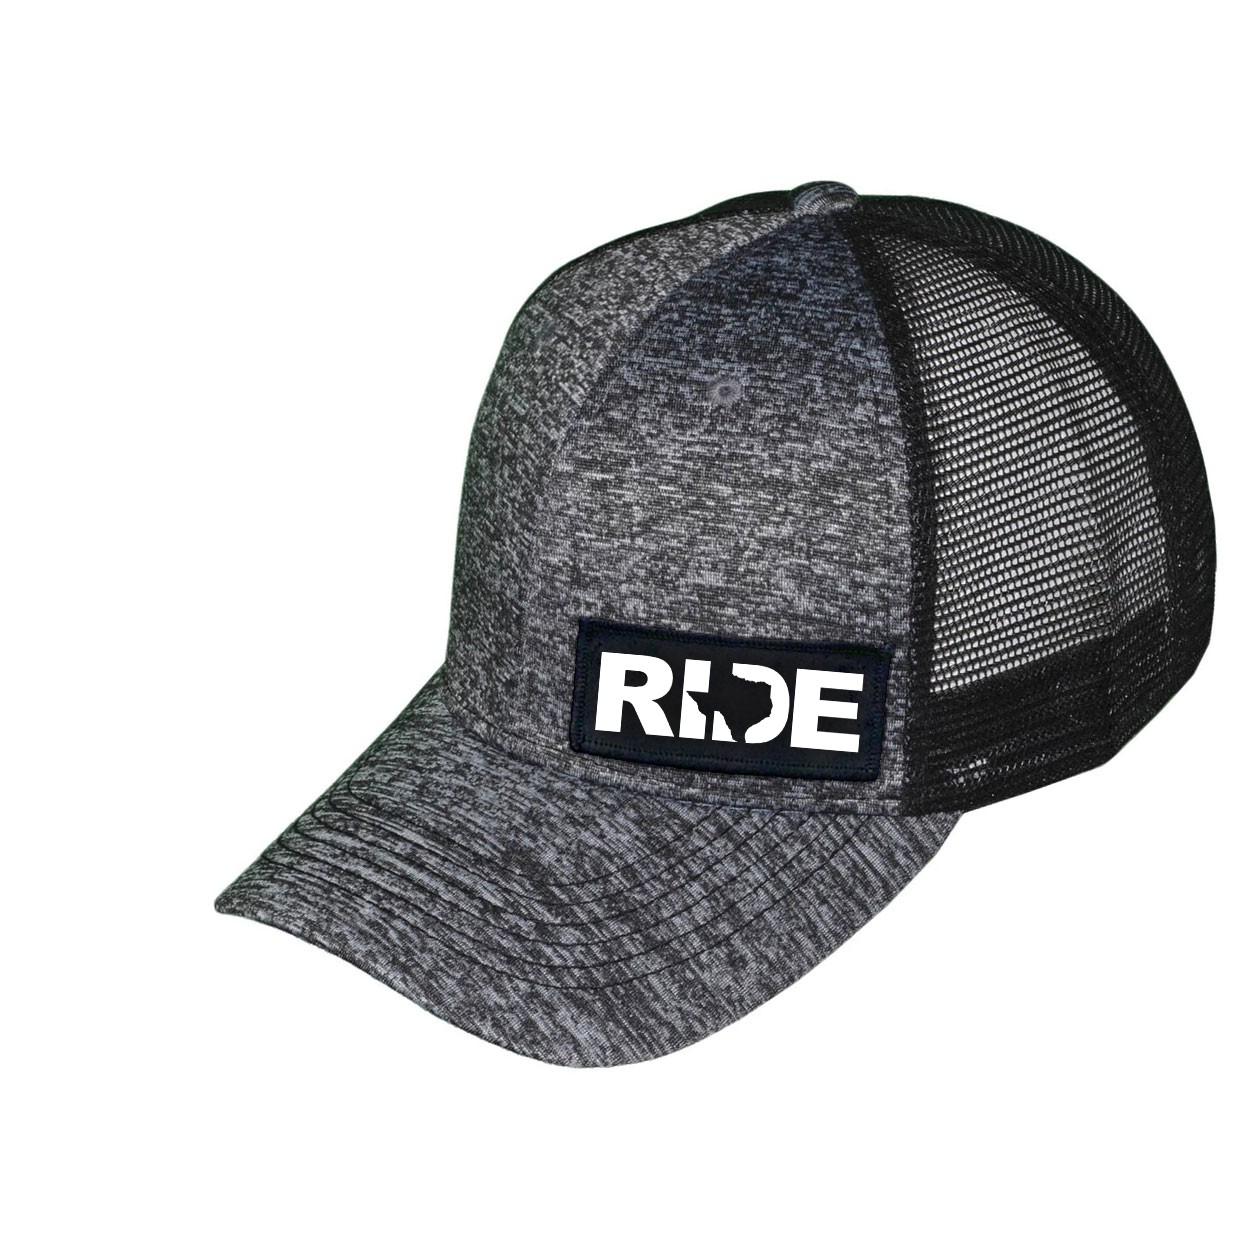 Ride Texas Night Out Woven Patch Melange Snapback Trucker Hat Gray/Black (White Logo)